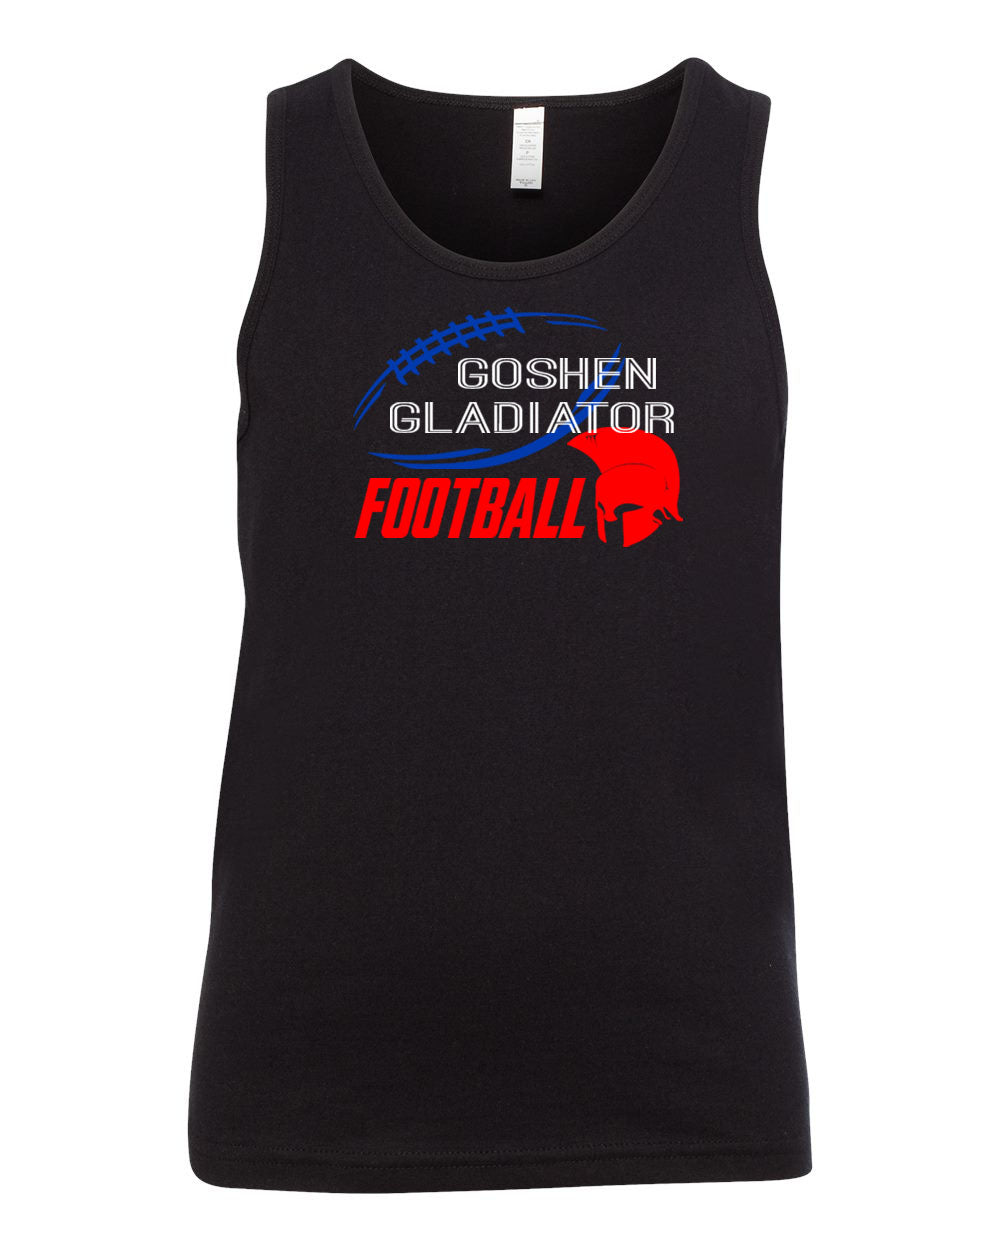 Goshen Football design 6 Muscle Tank Top